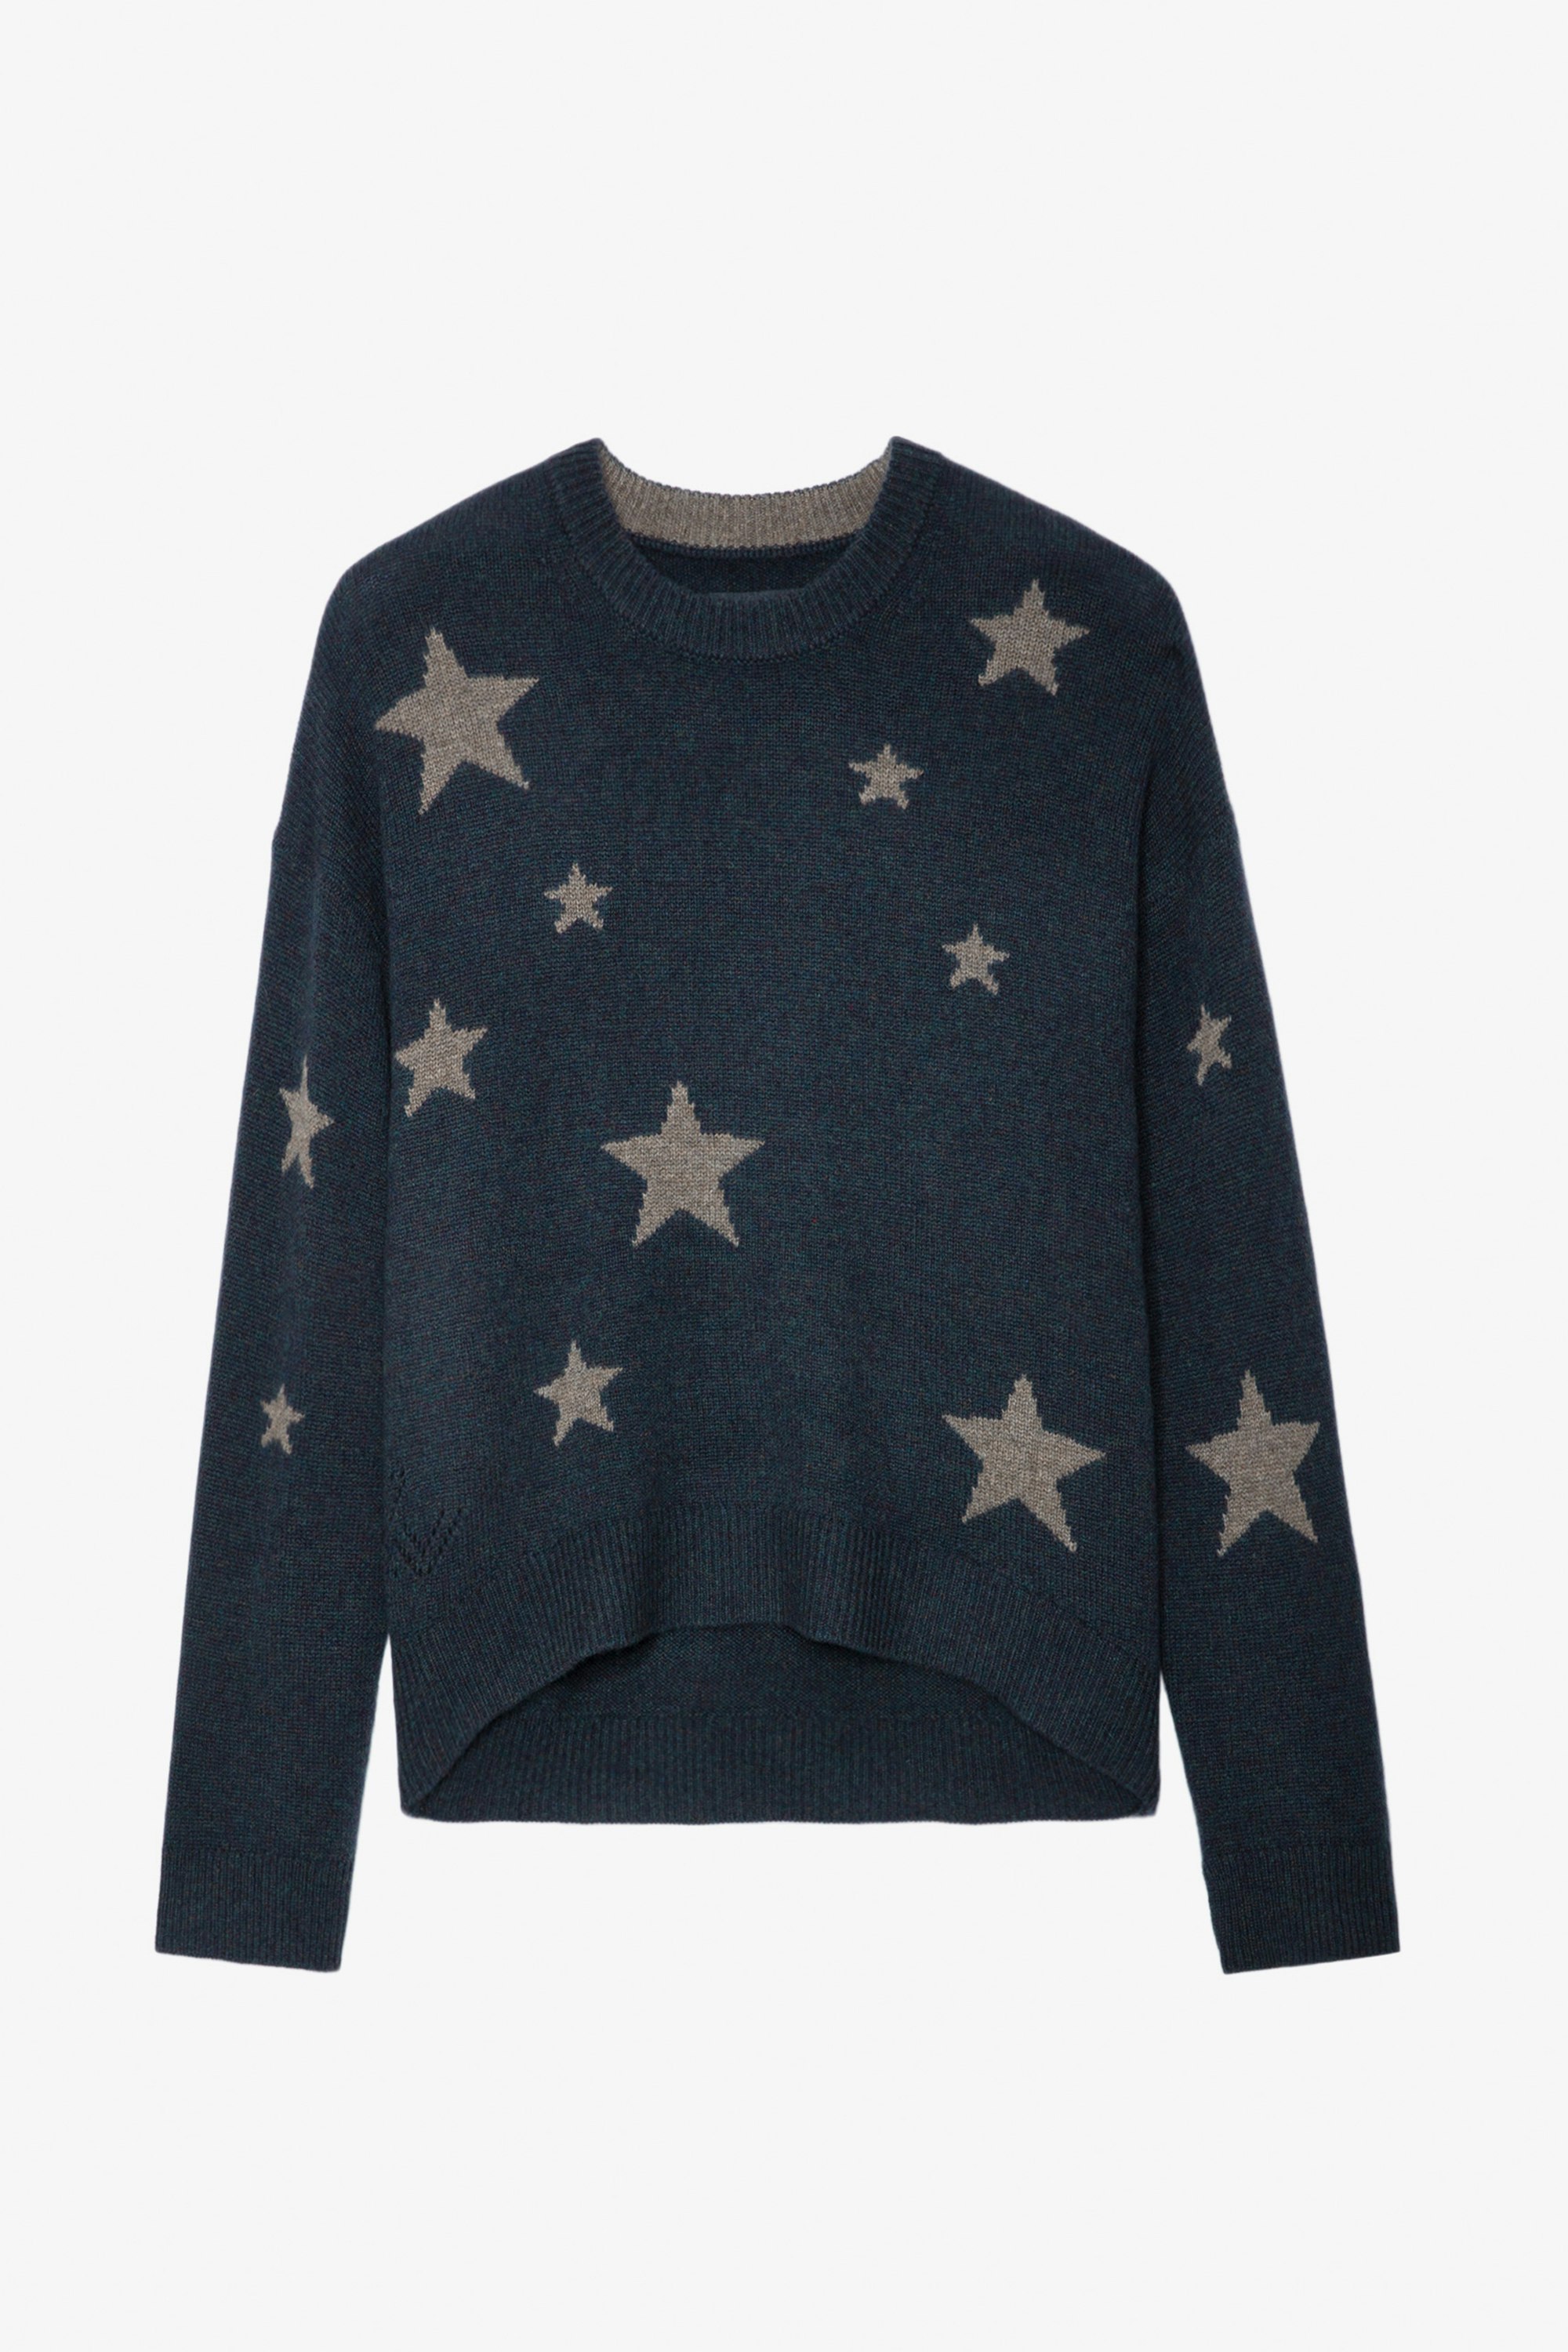 Markus Stars Cashmere Sweater - Women's cashmere sweater with star-shaped motifs.